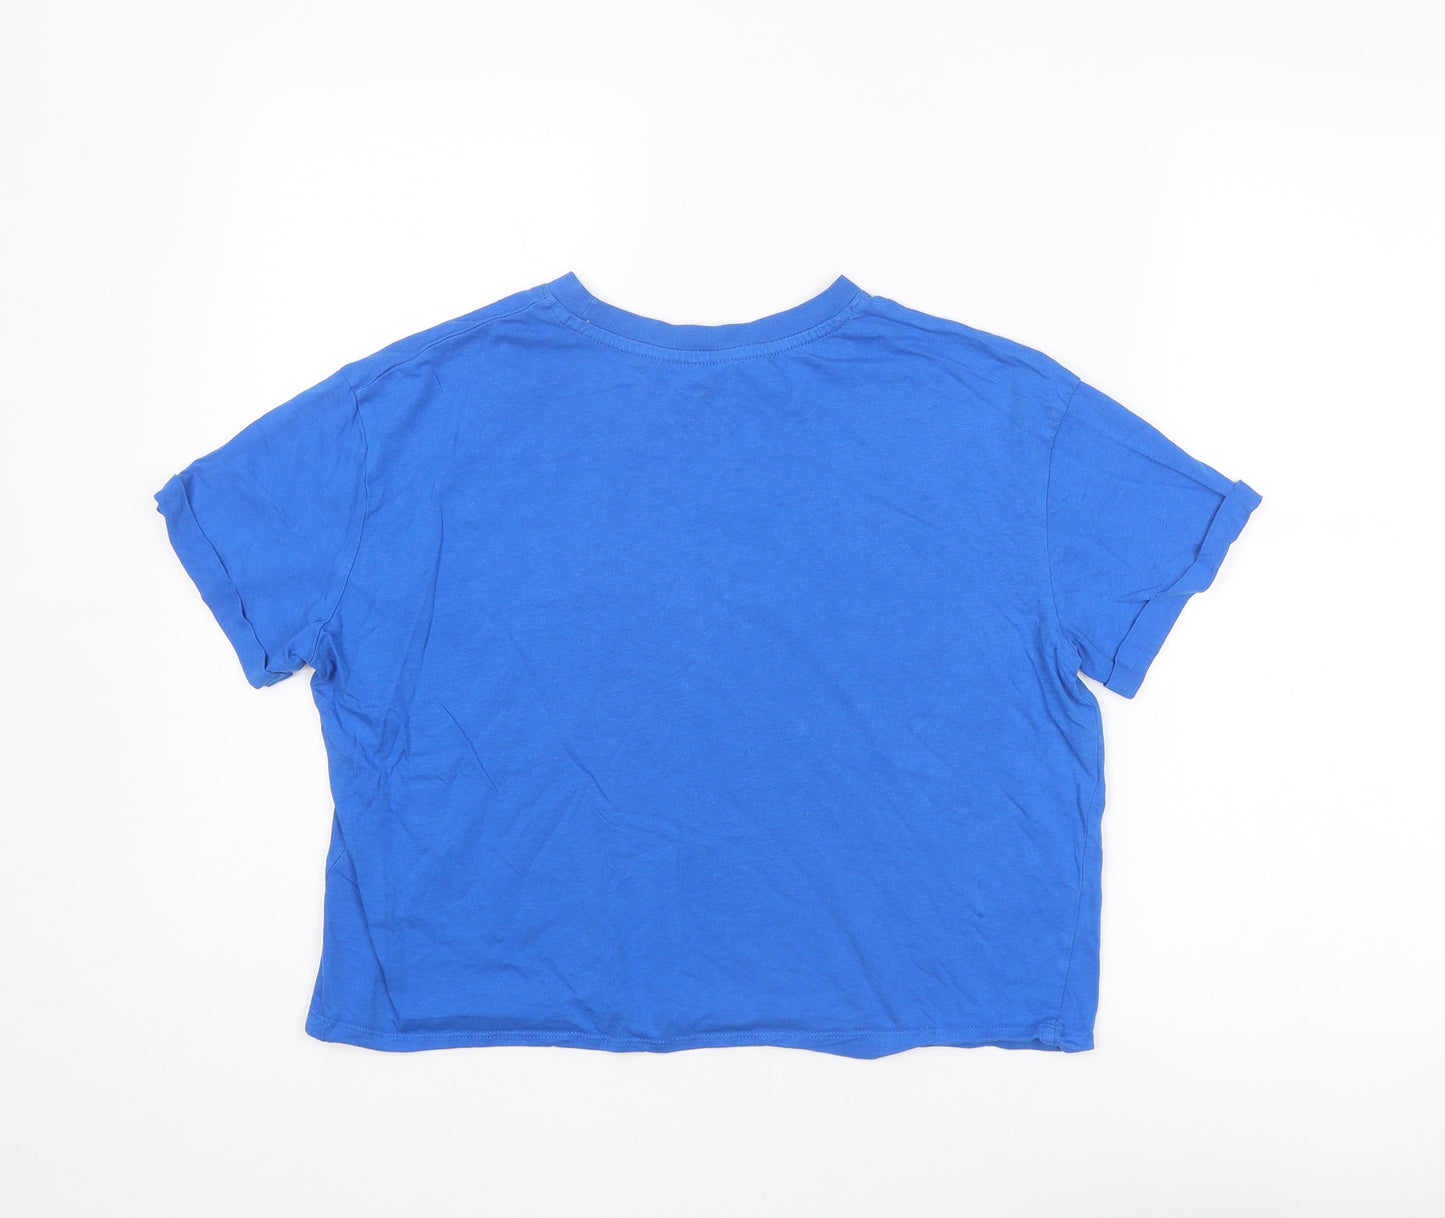 New Look Womens Blue Cotton Basic T-Shirt Size 10 Crew Neck